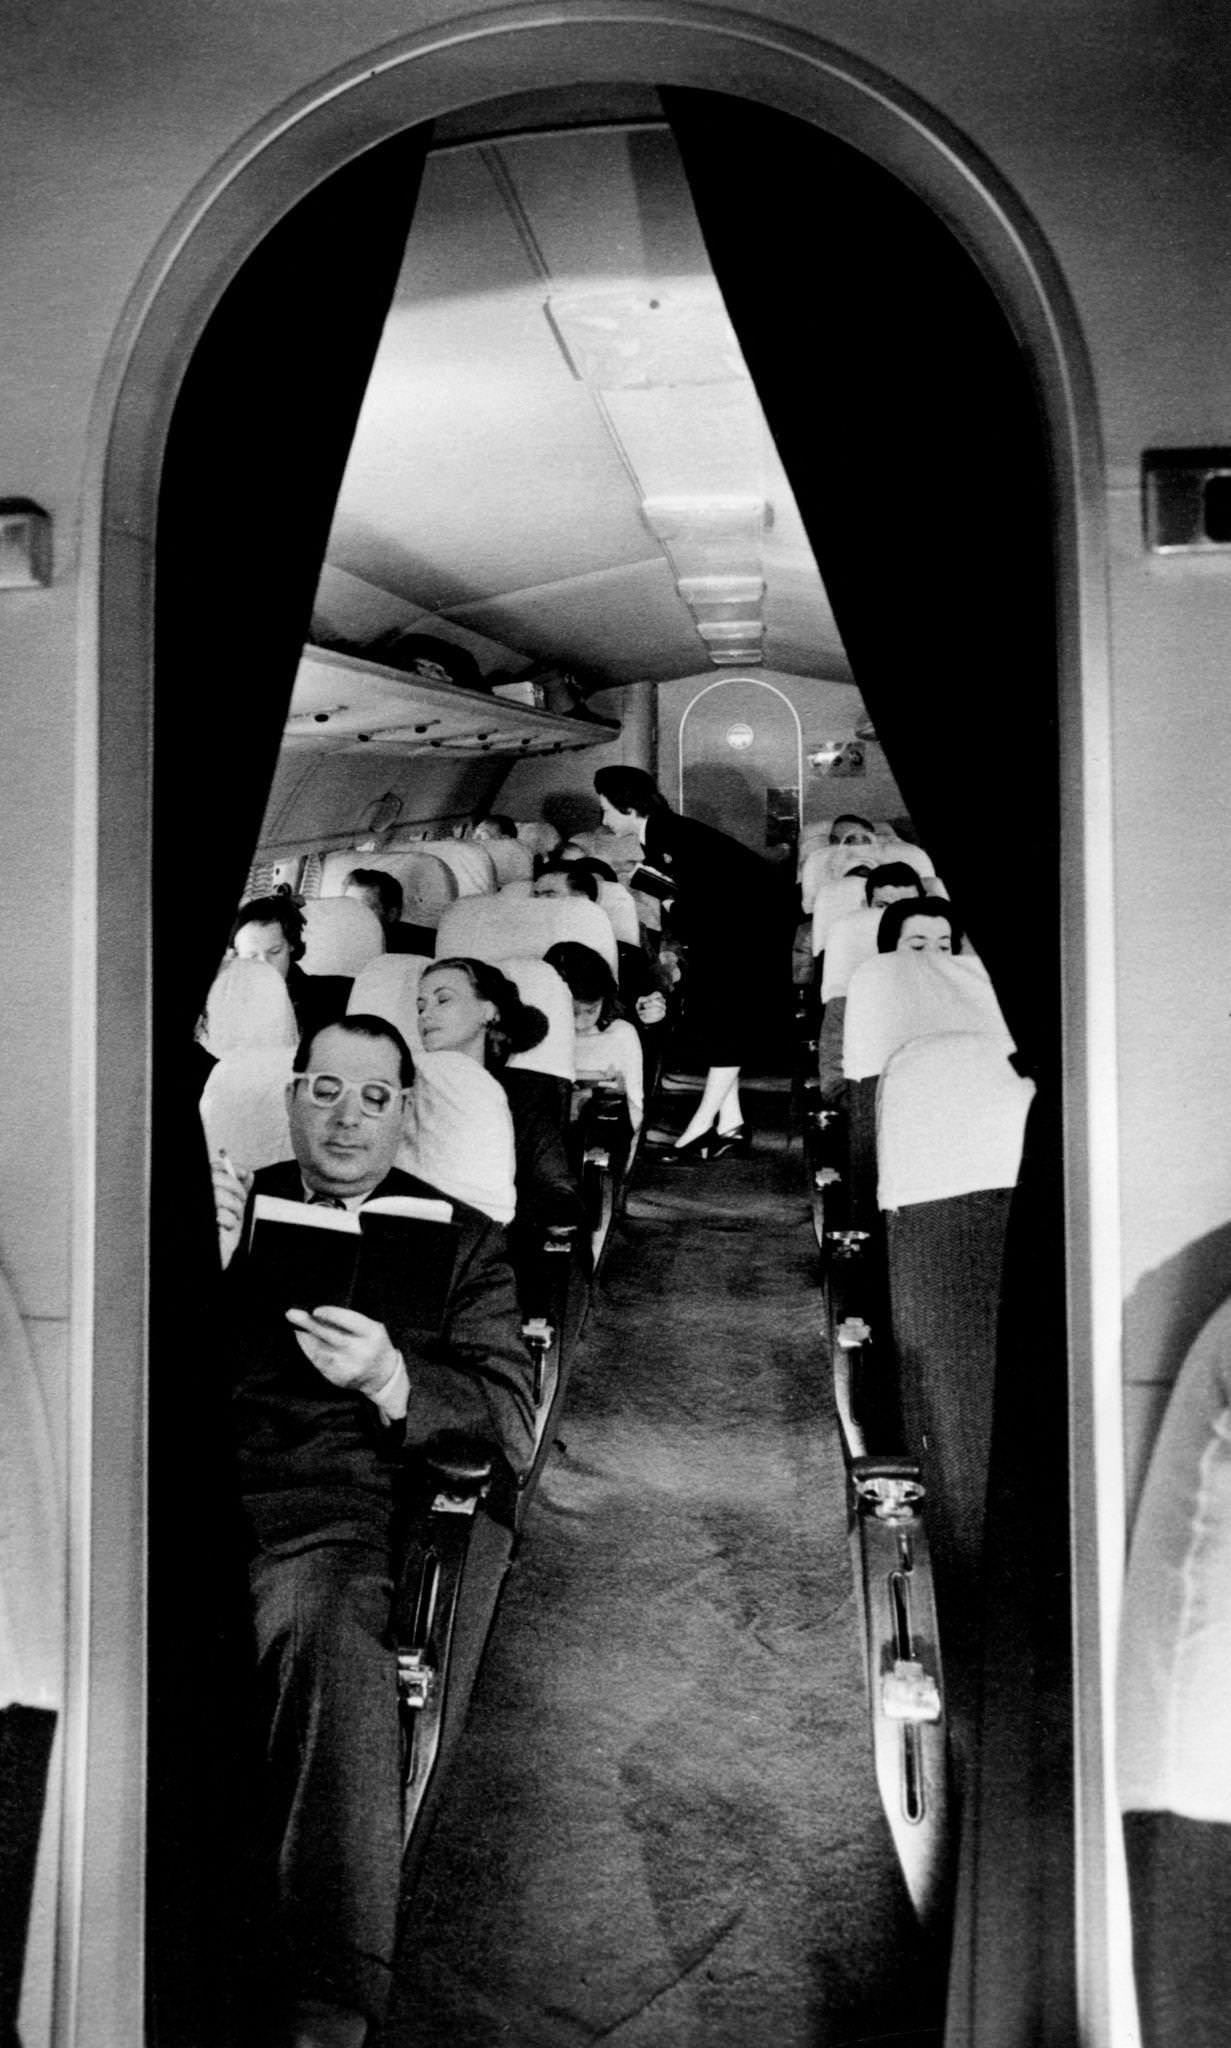 Comet airplane. 1950-60.